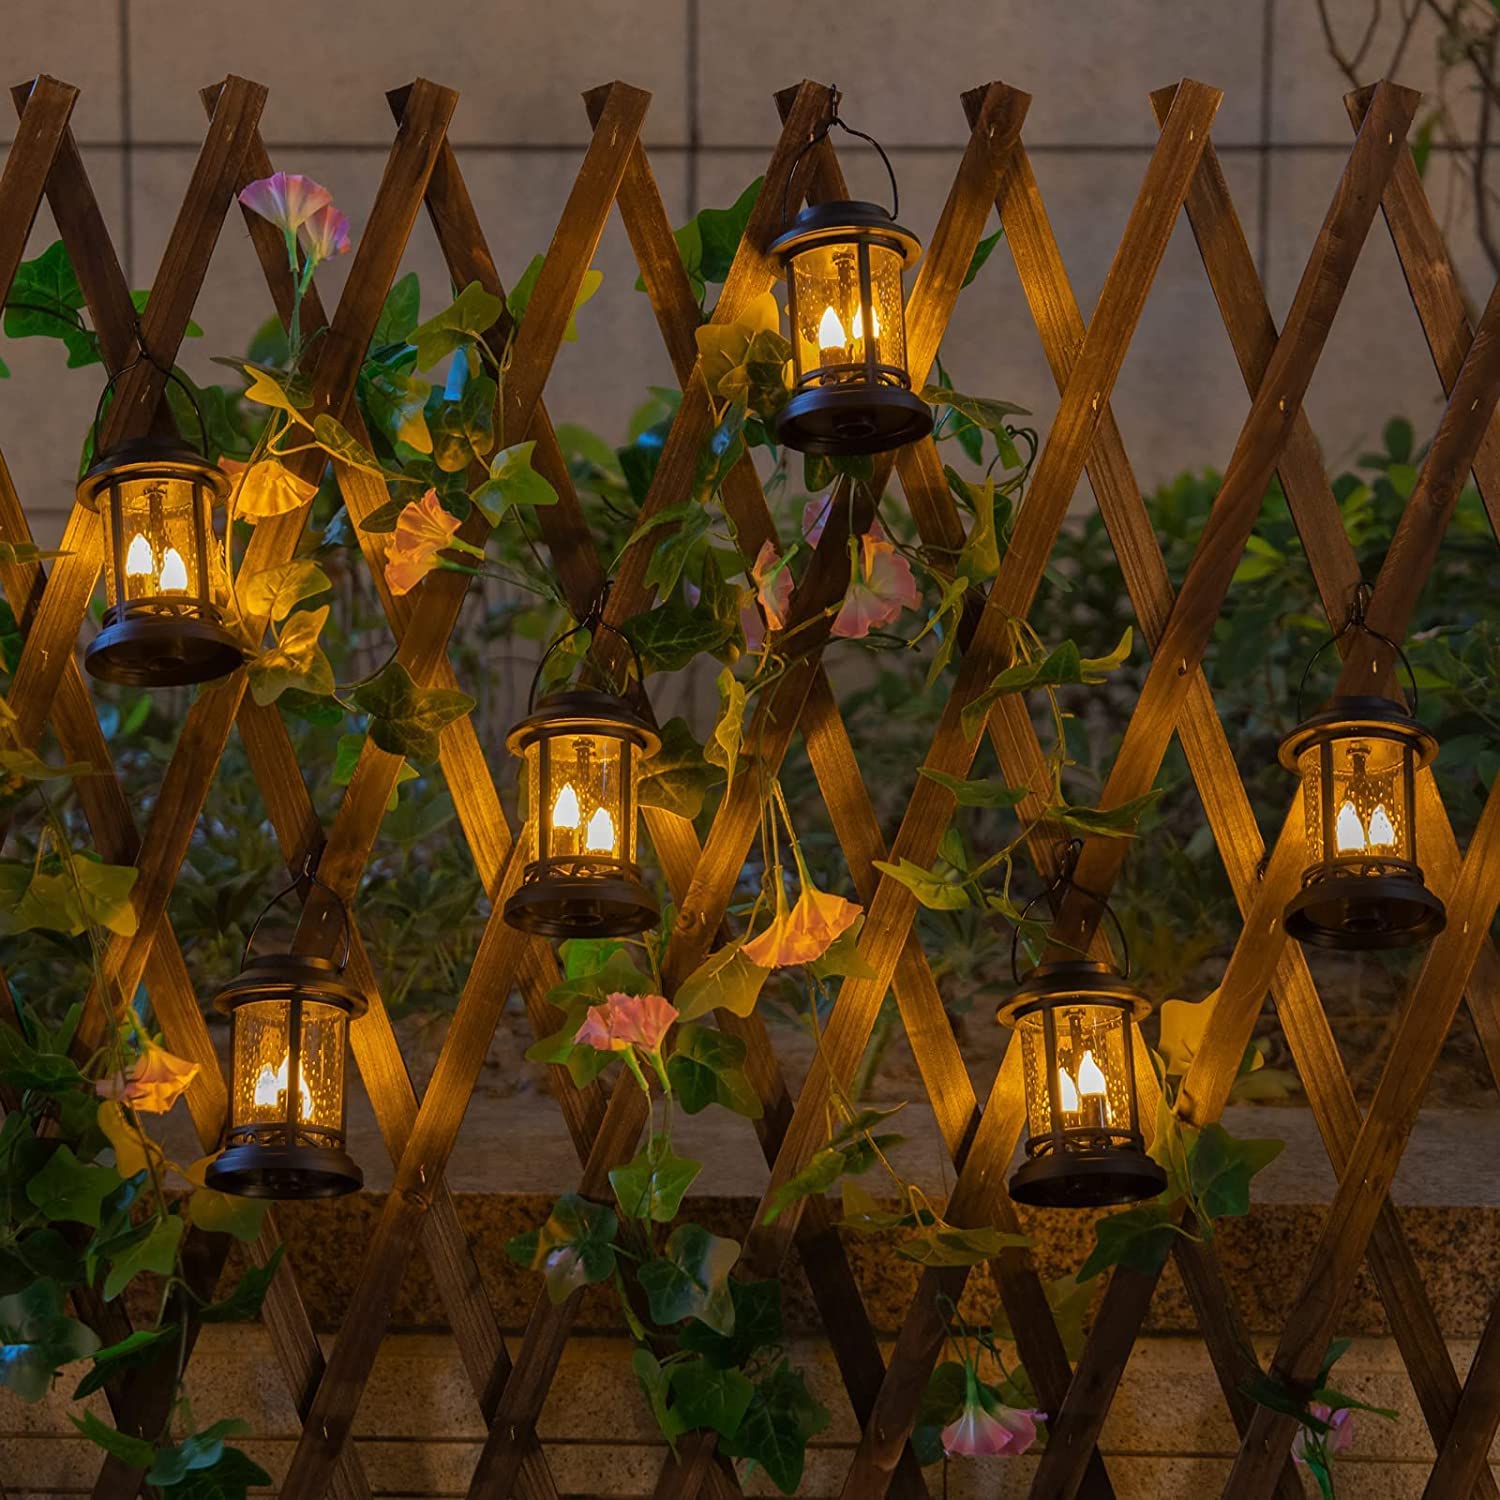 Beautyard Outdoor Hanging Solar Candles Lights Flickering Decorative L – 